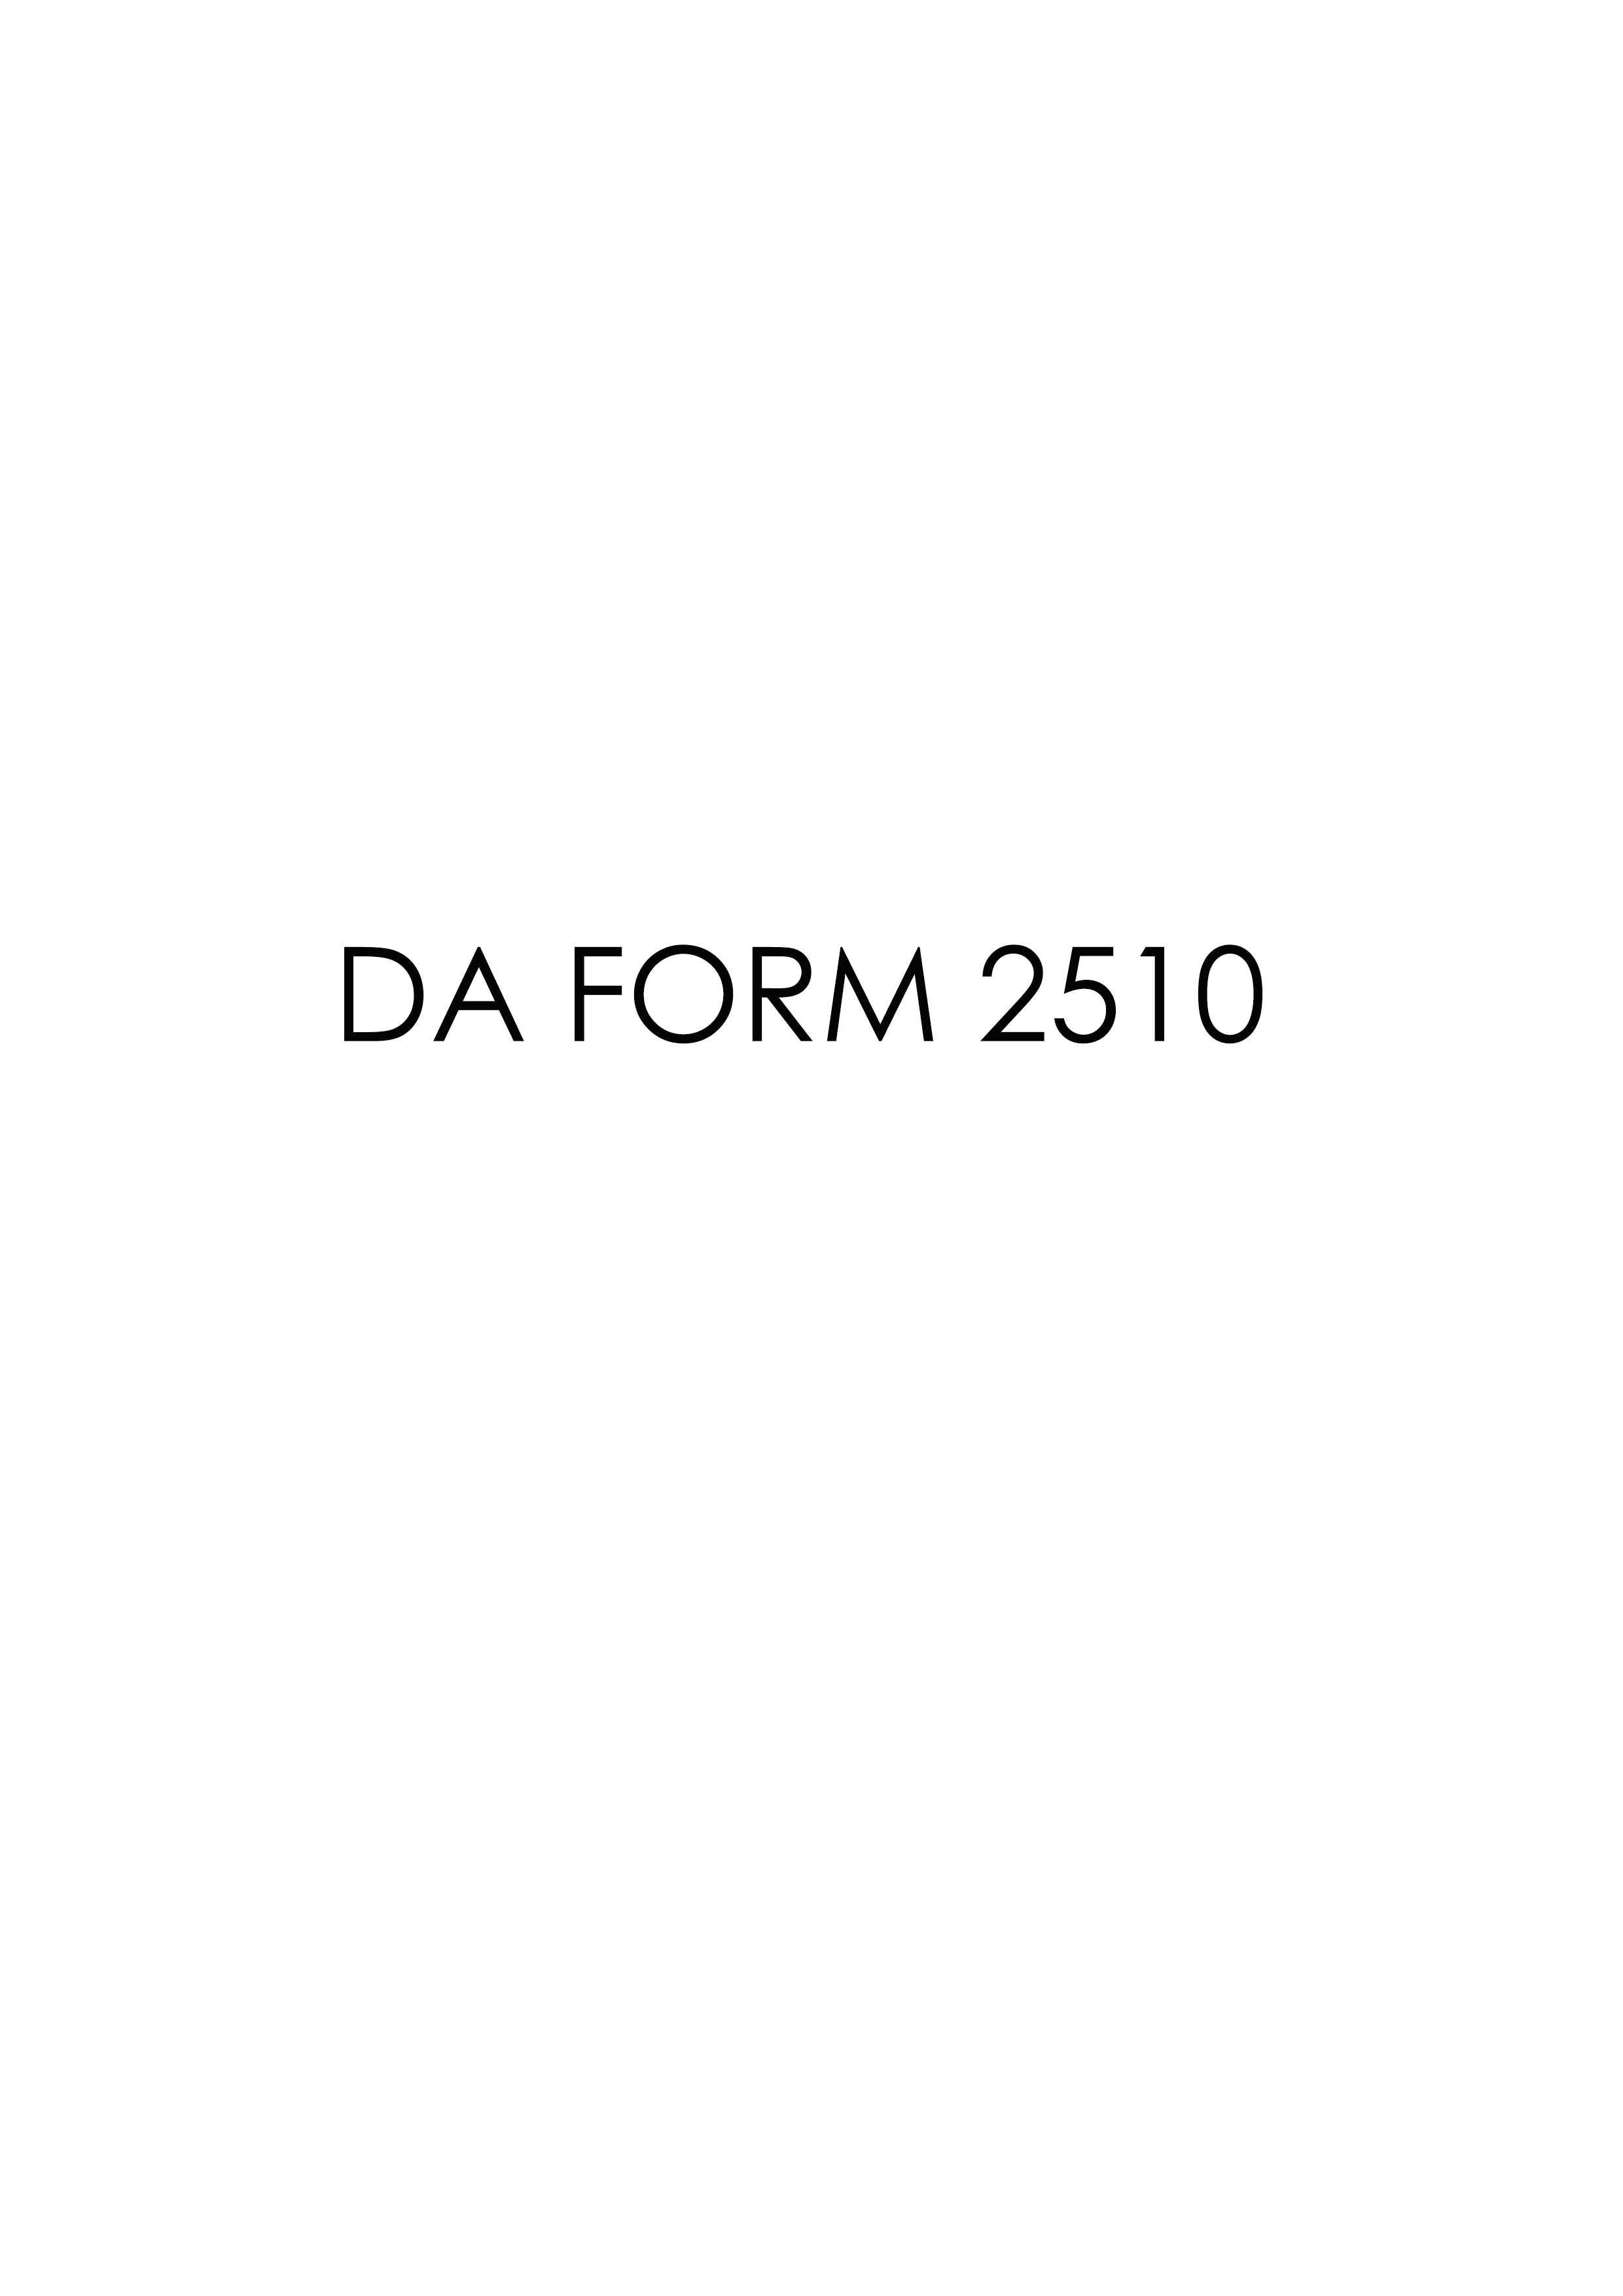 da Form 2510 fillable